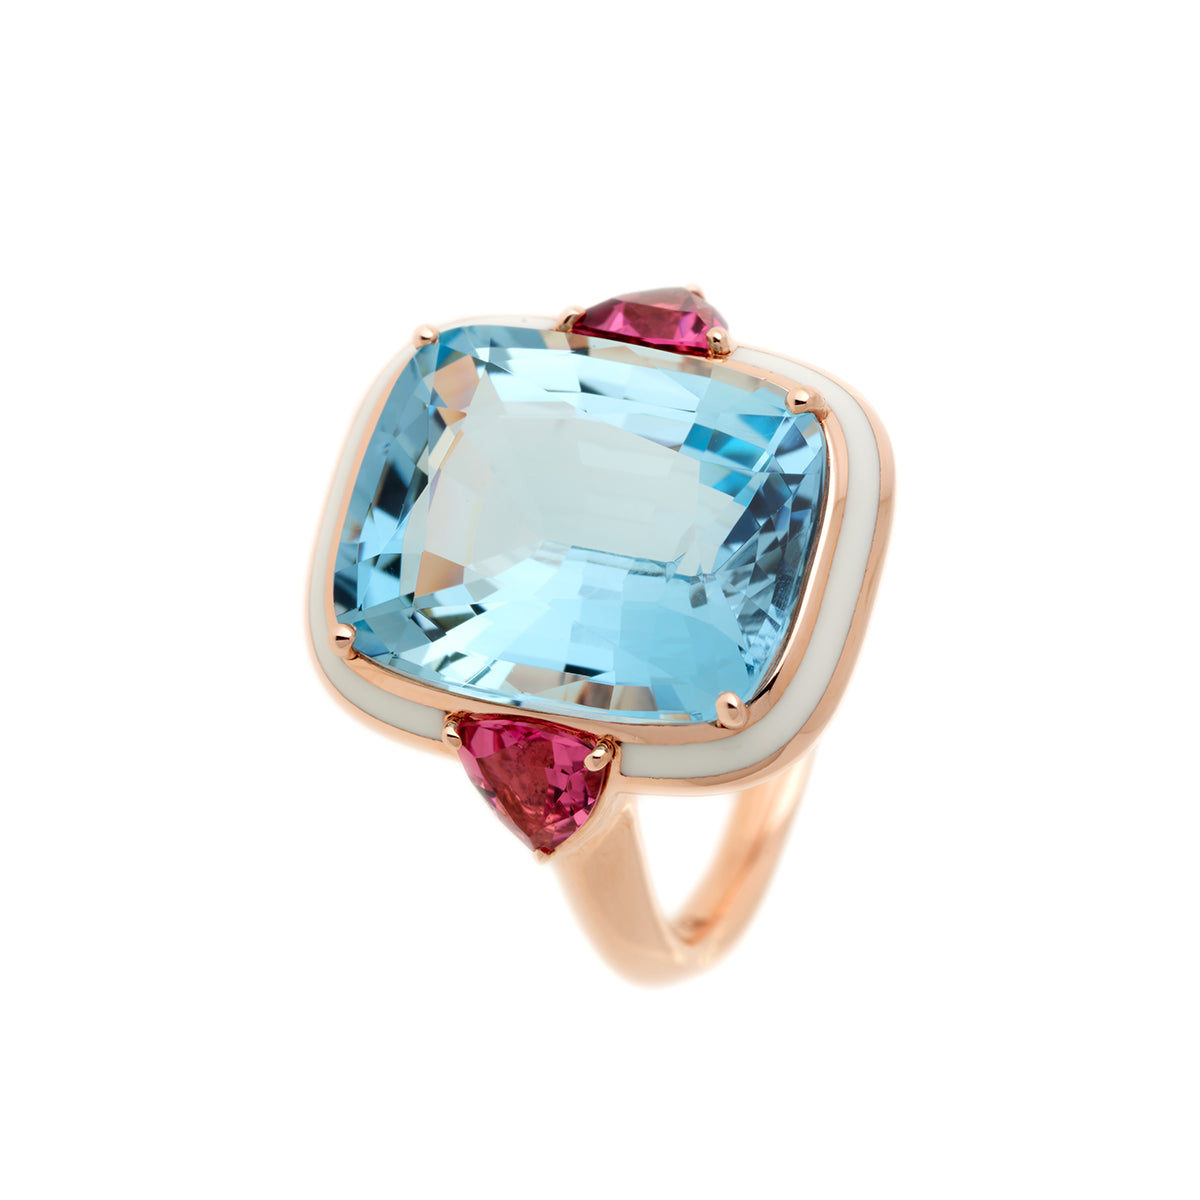 “Gemma” Aquamarine Ring, Ivory